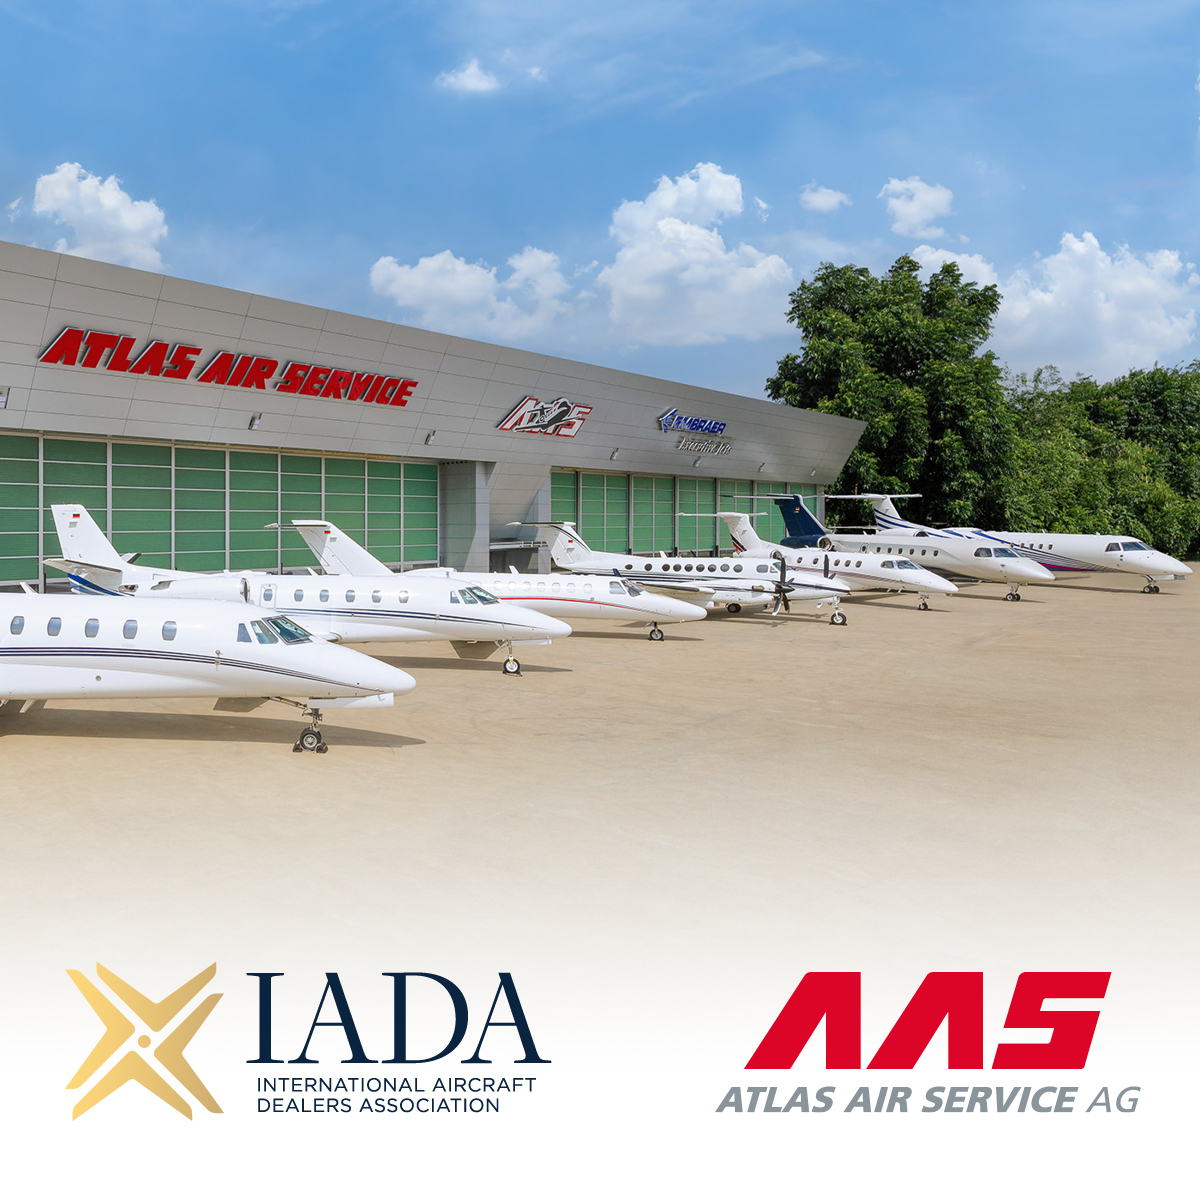 Atlas Air Service ist akkreditiertes Mitglied der IADA